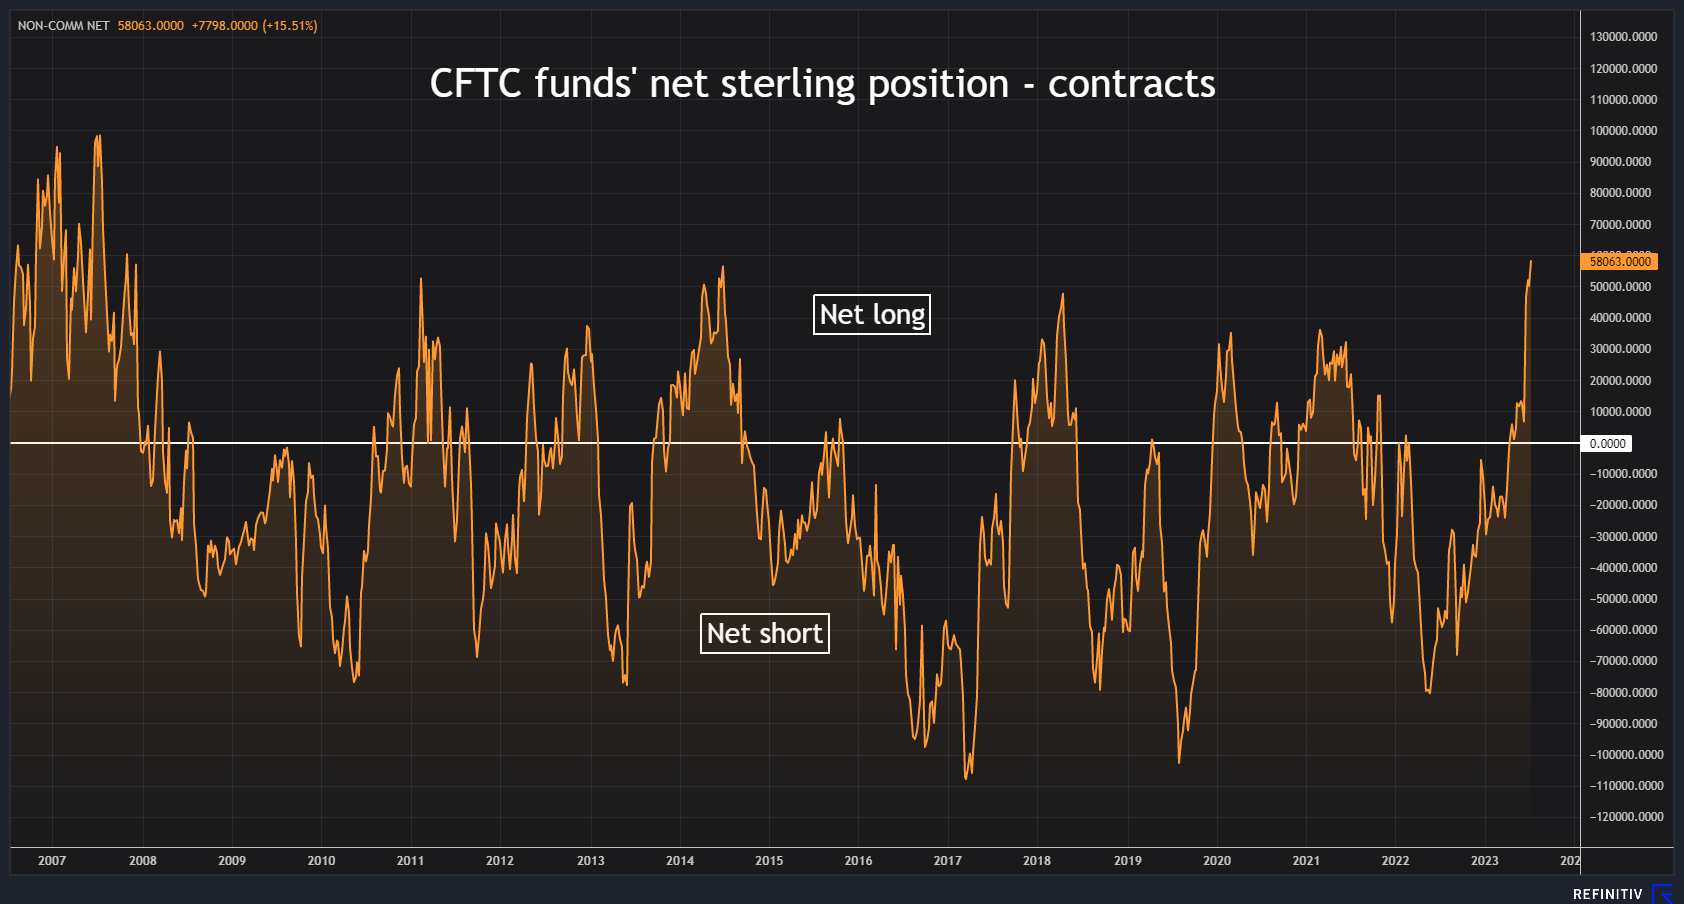 CFTC funds' biggest net long GBP since 2007